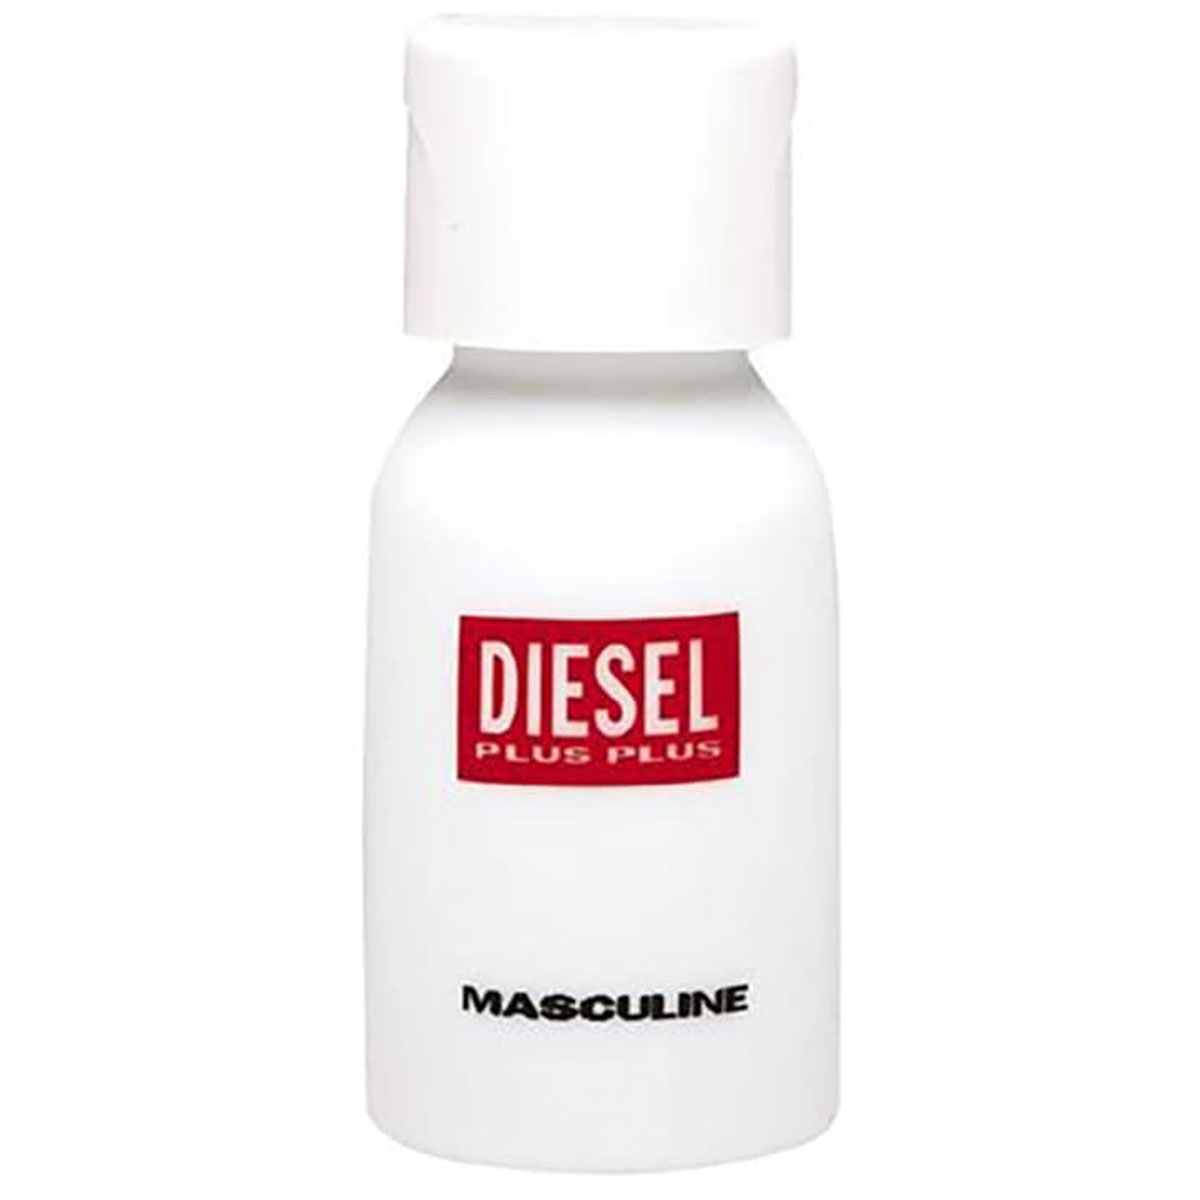  Diesel Plus Plus Masculine 